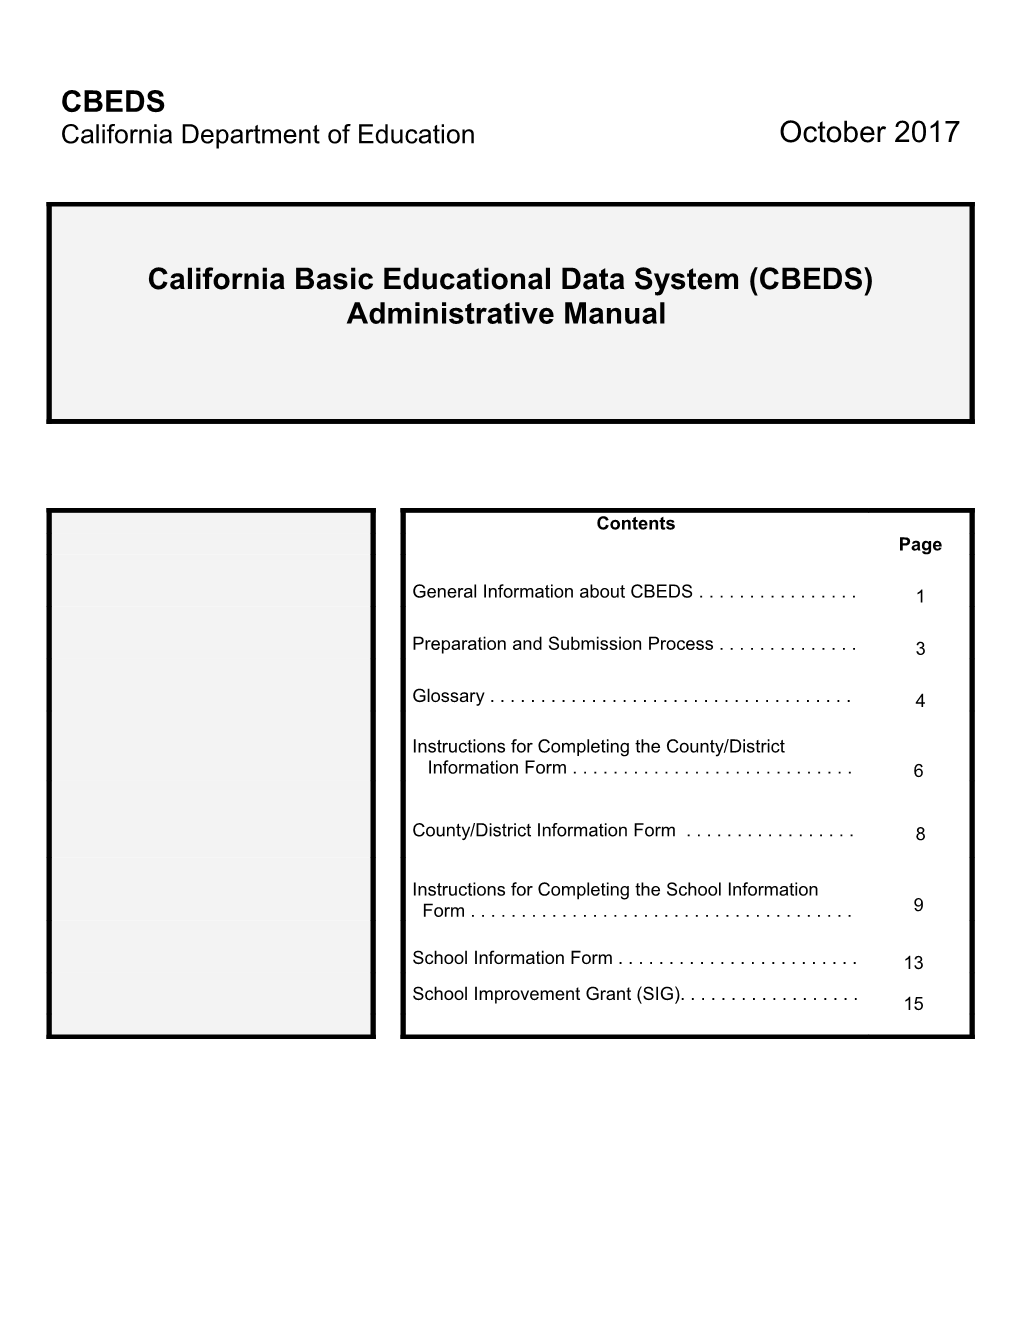 2017 CBEDS Administrative Manual - California Basic Educational Data System (CBEDS) (CA